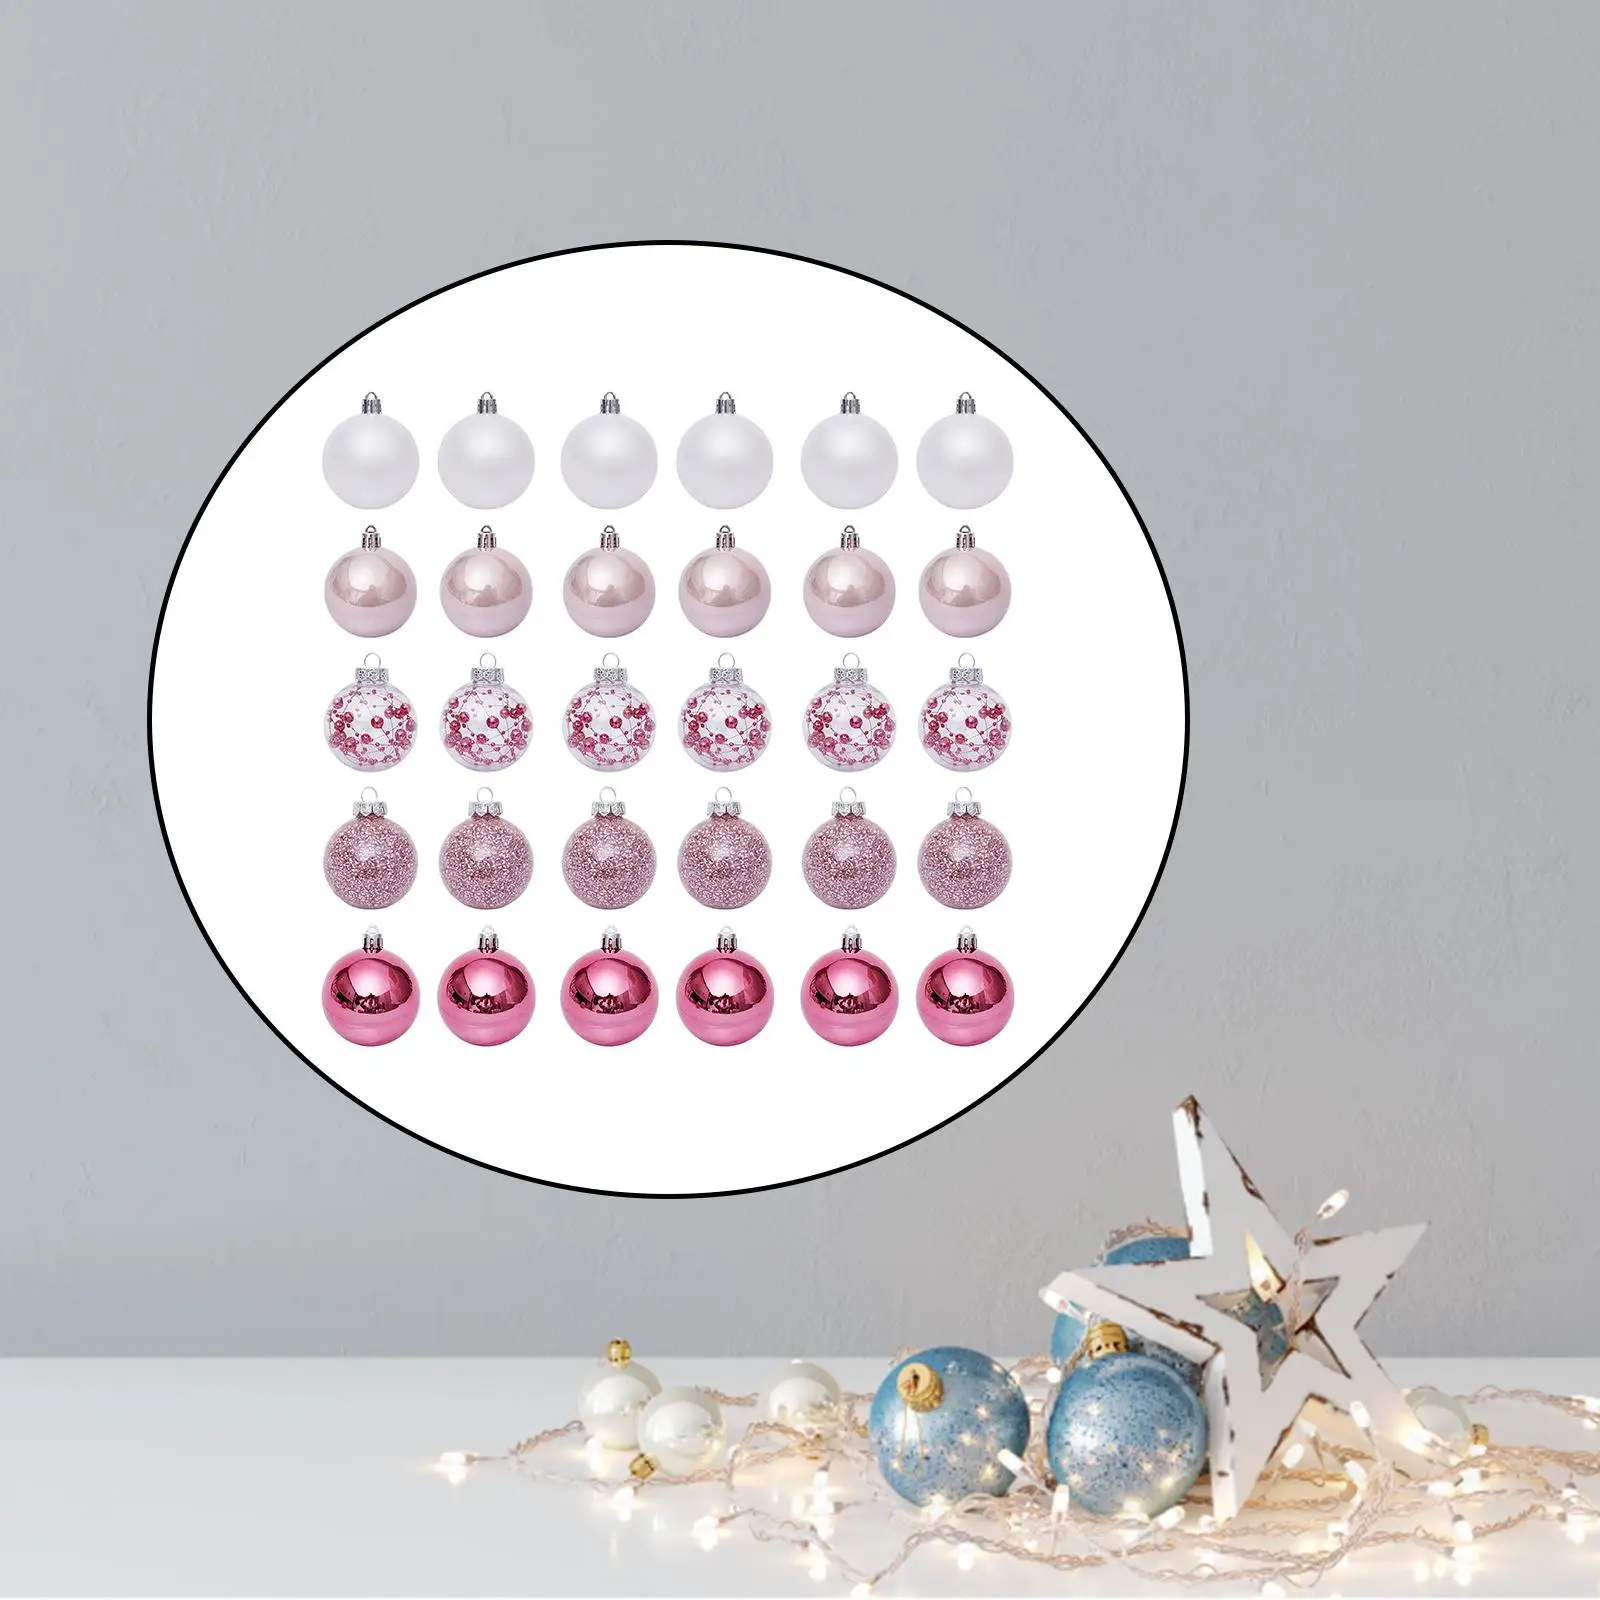 

30 6cm Hanging Christmas Baubles Balls Shatterproof Glittering Christmas Tree Pendants Seasonal Decorations for Festival